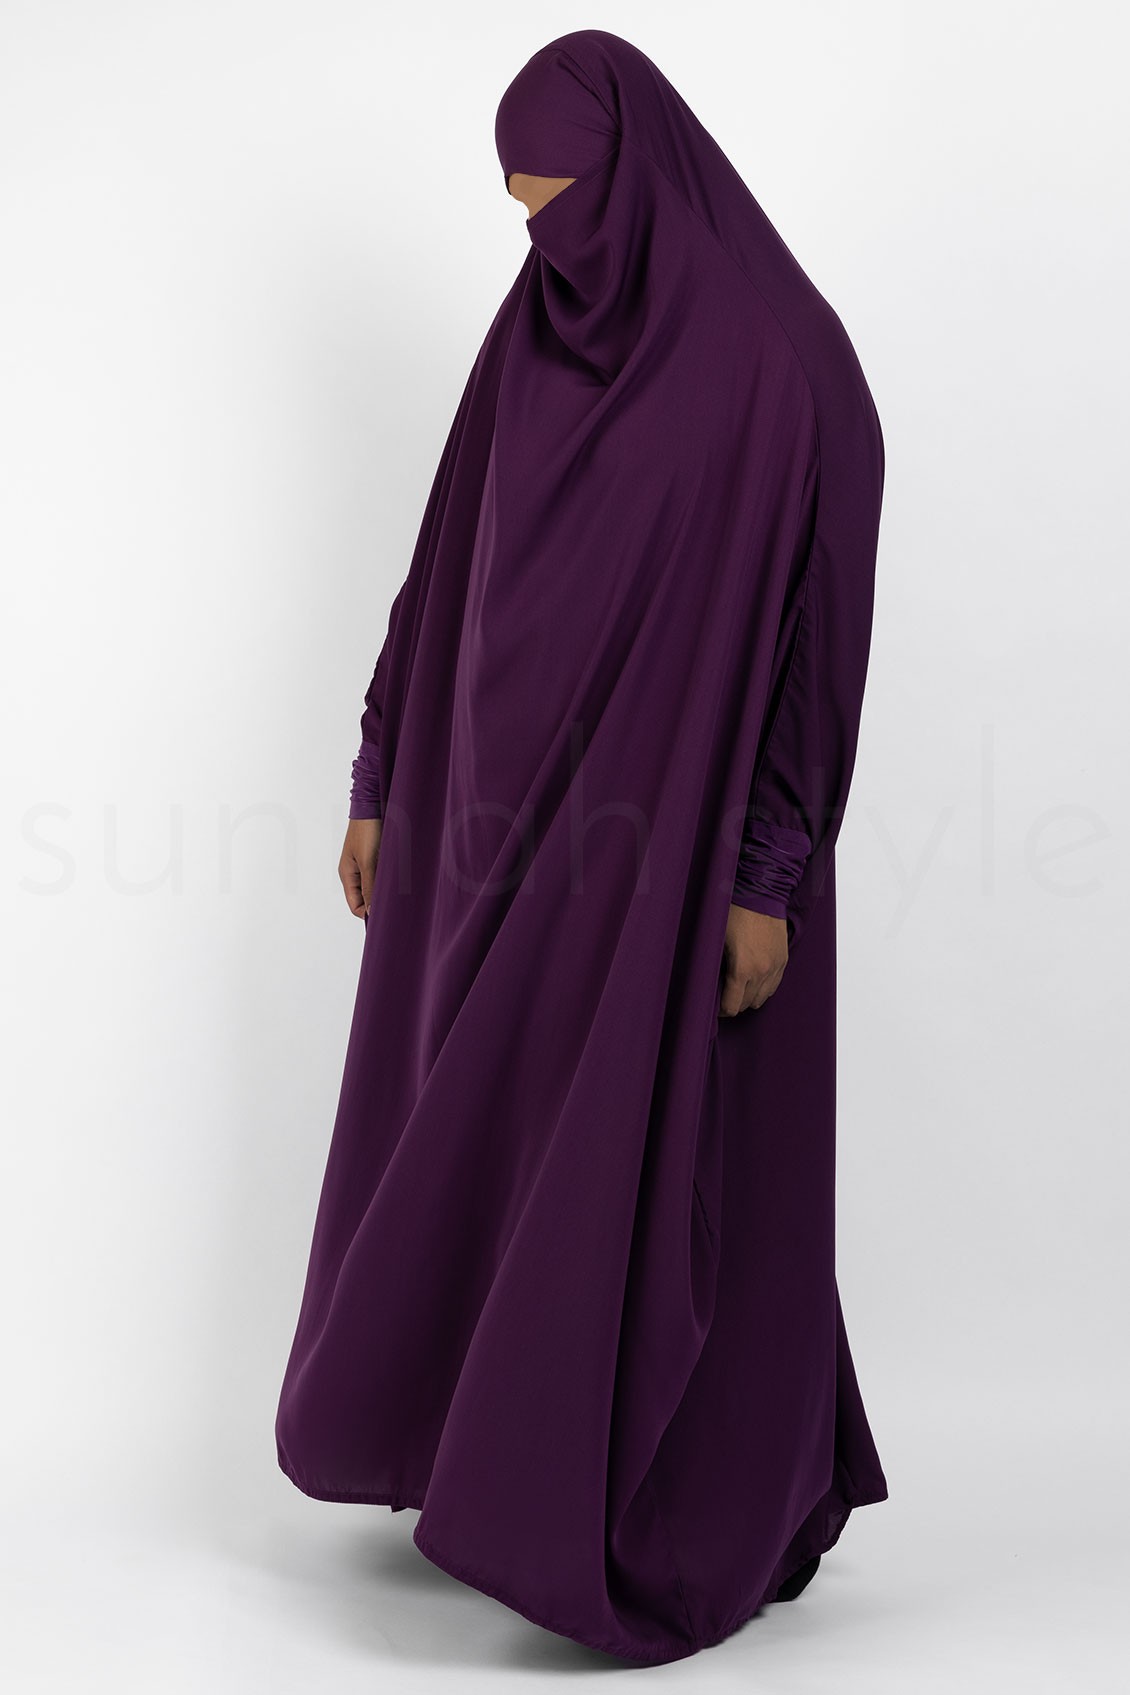 Sunnah Style Plain Full Length Jilbab Grape